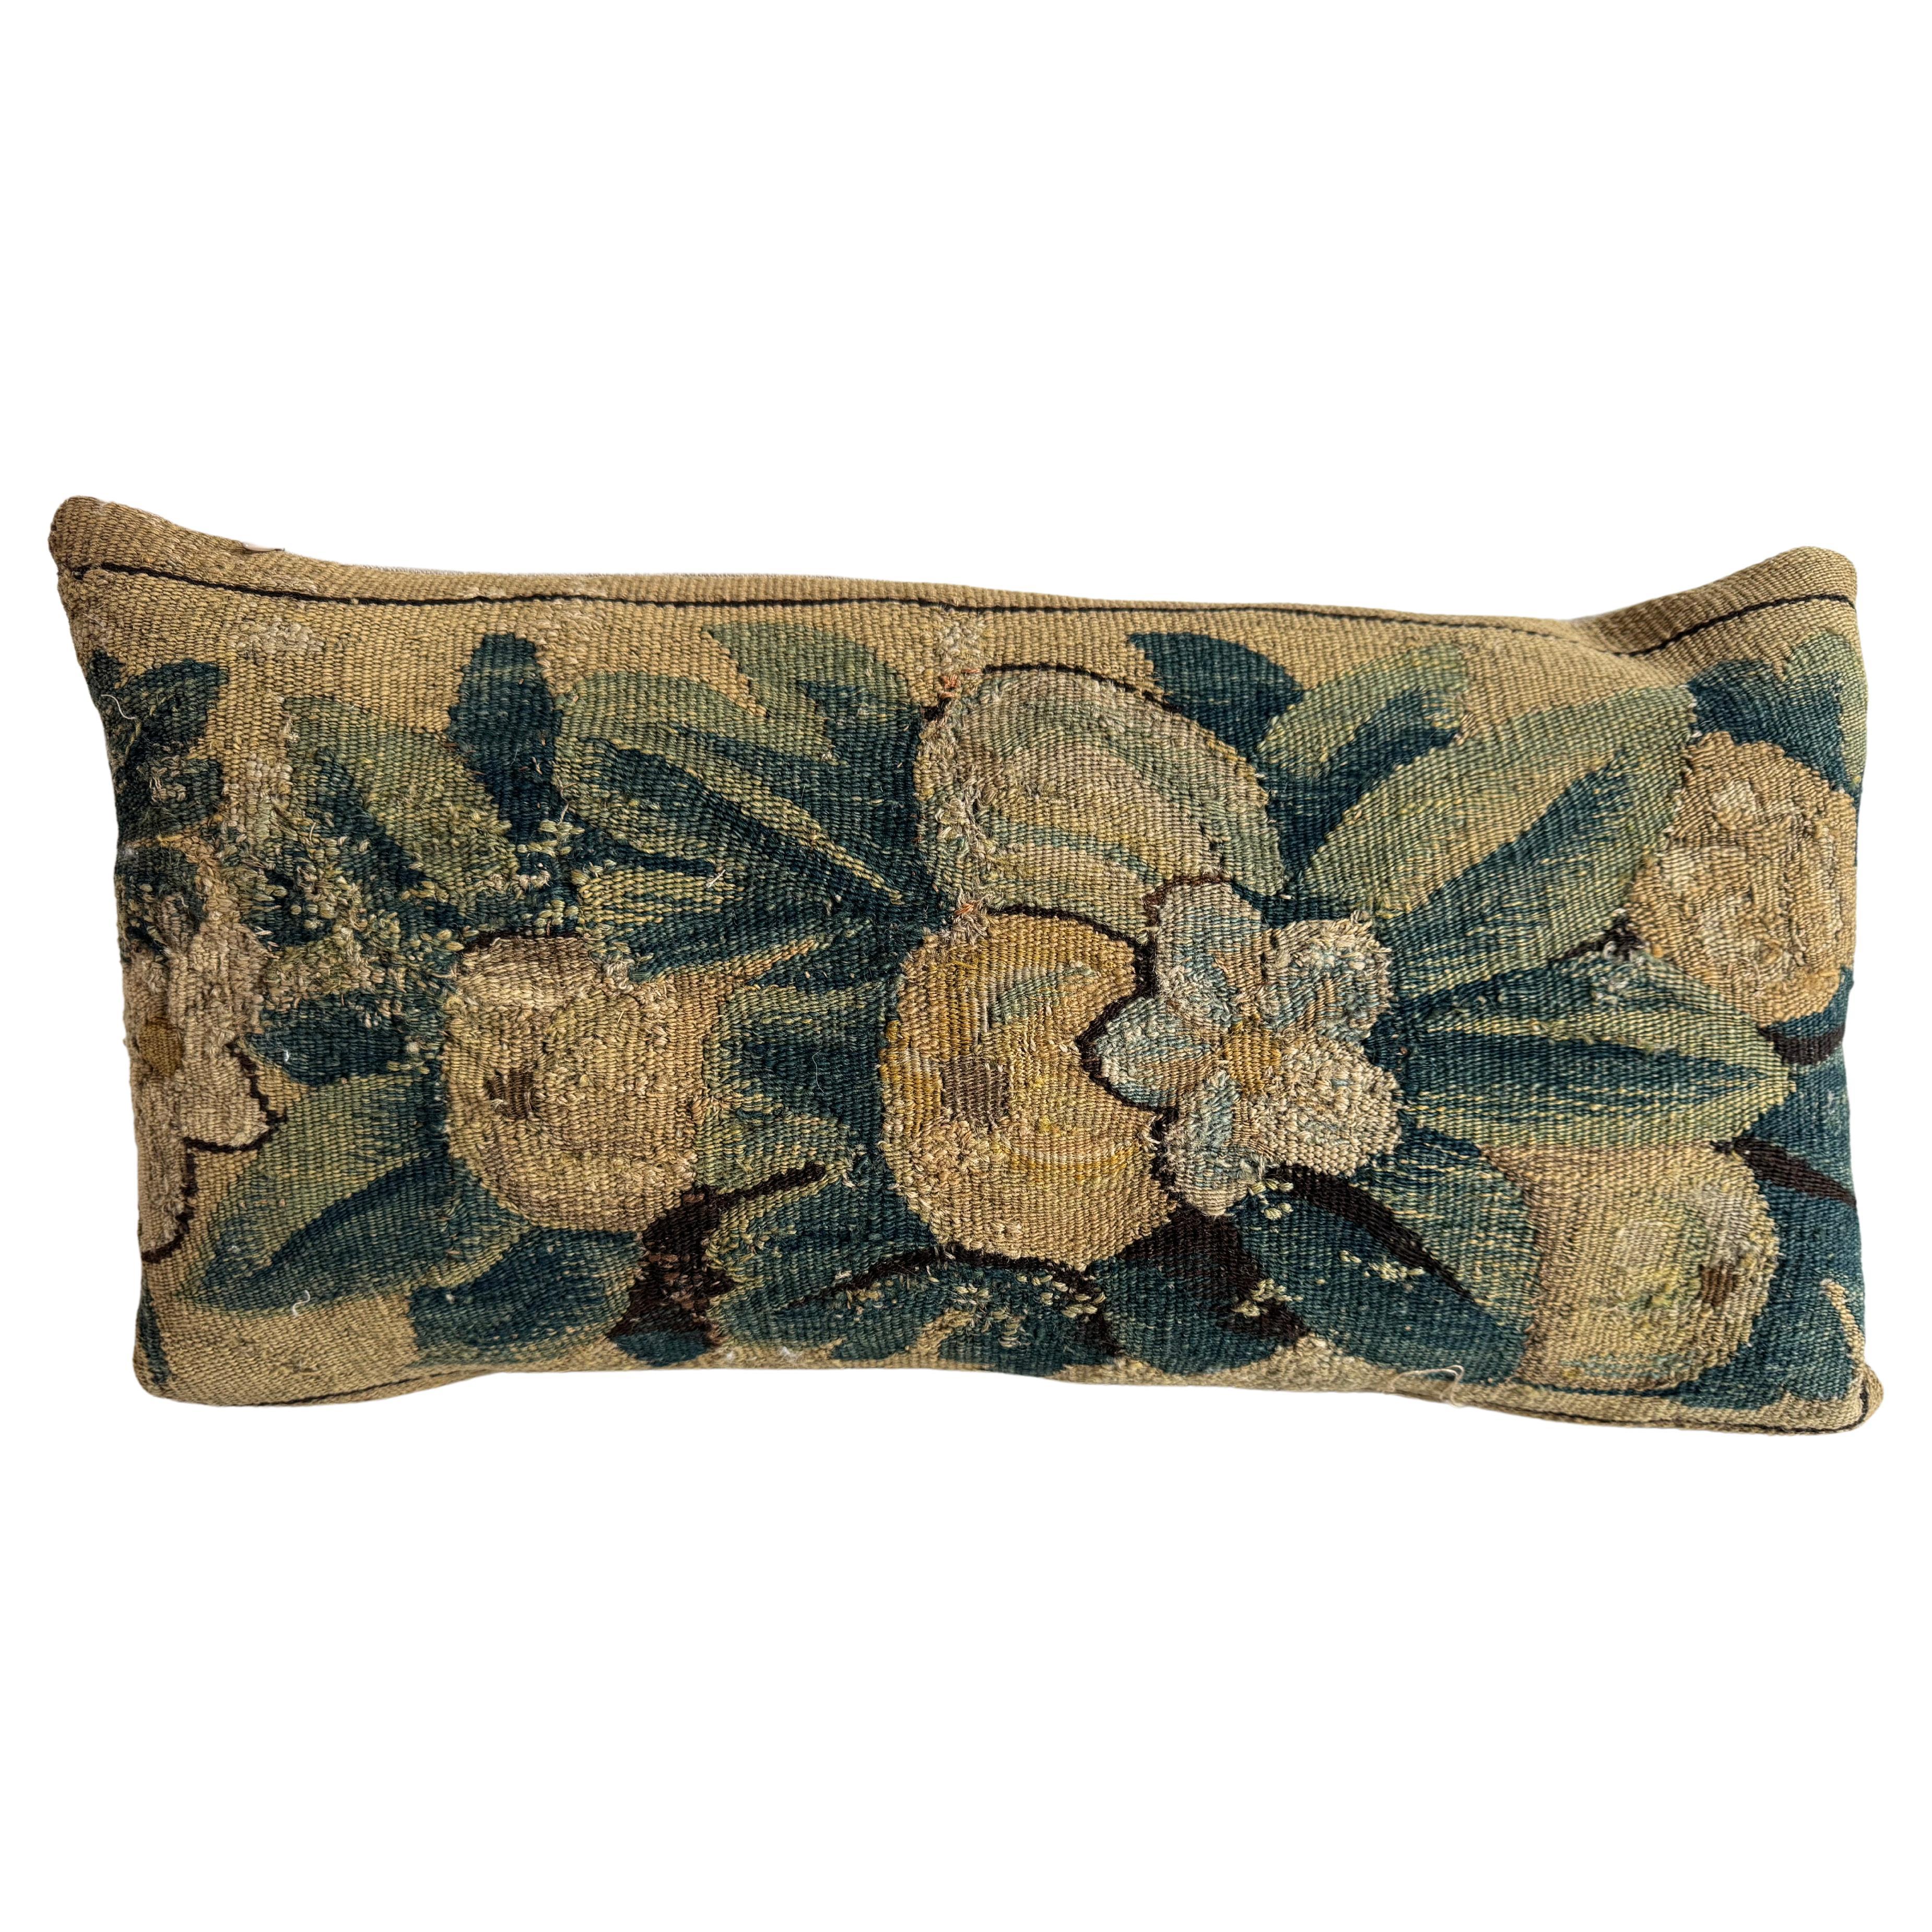 17th Century Flemish Pillow - 22" x 12"